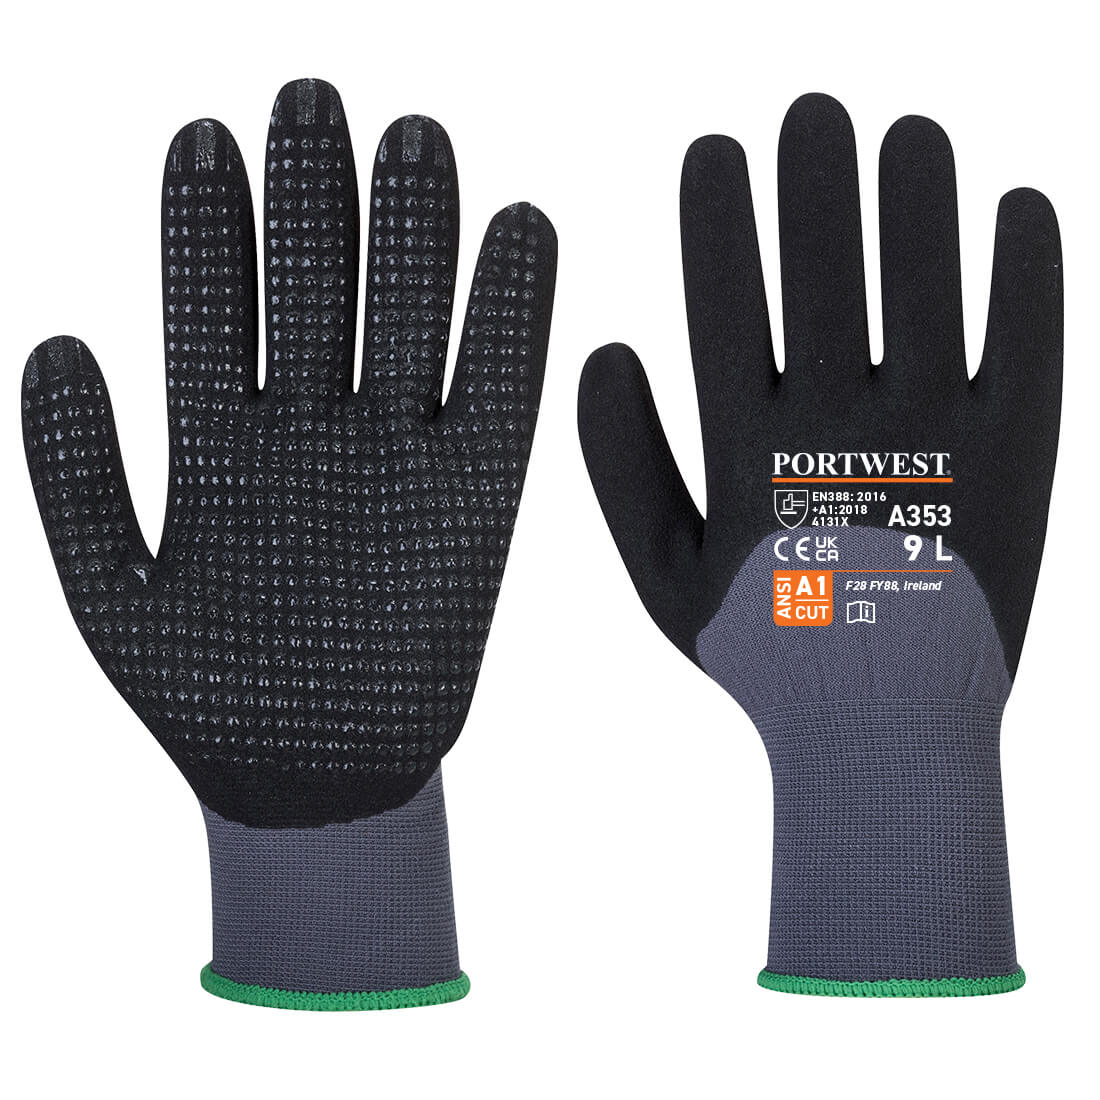 DermiFlex Ultra Plus Glove - Grey/Black